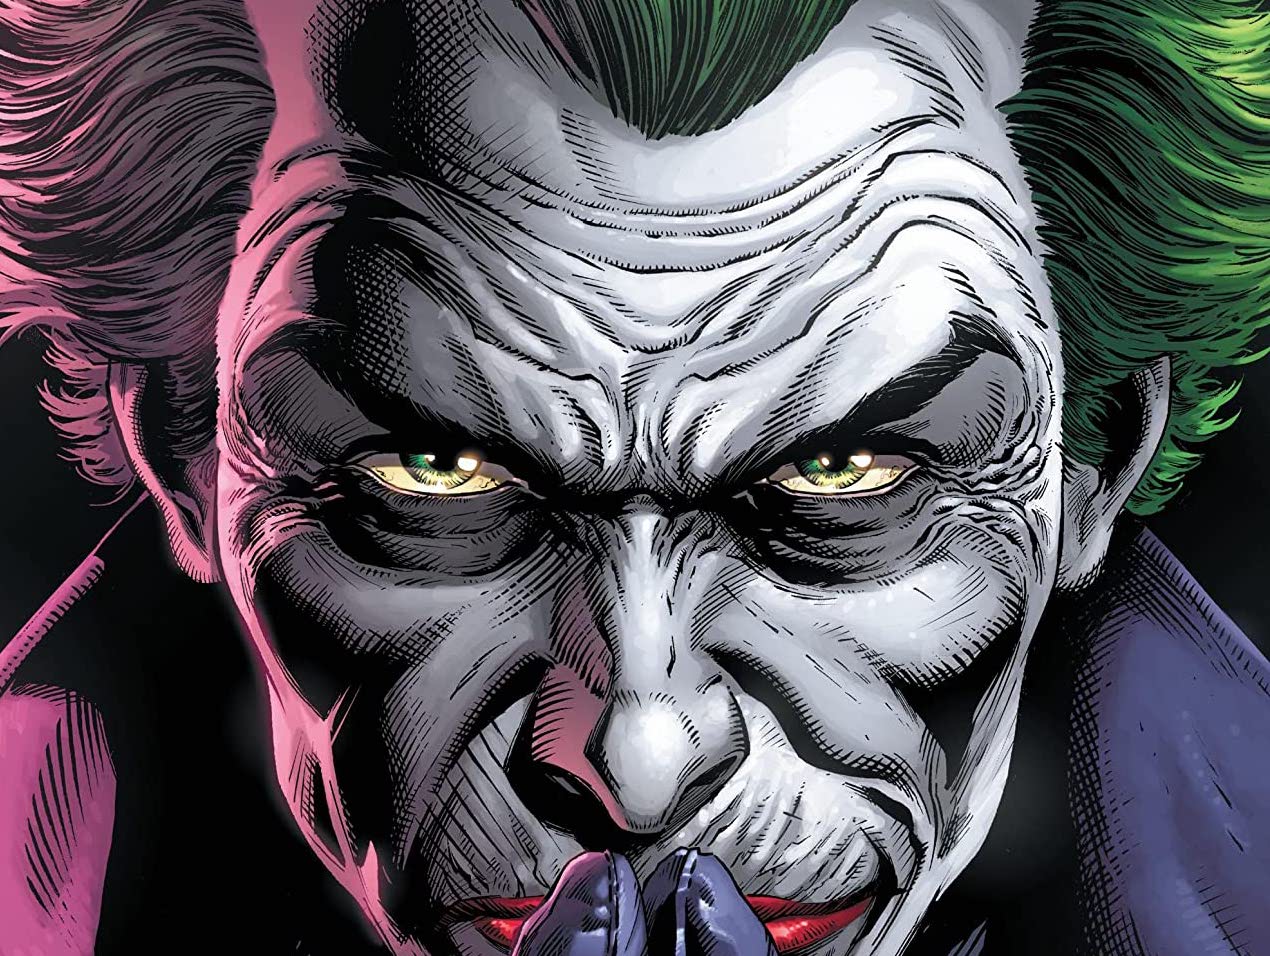 Batman: Three Jokers #2